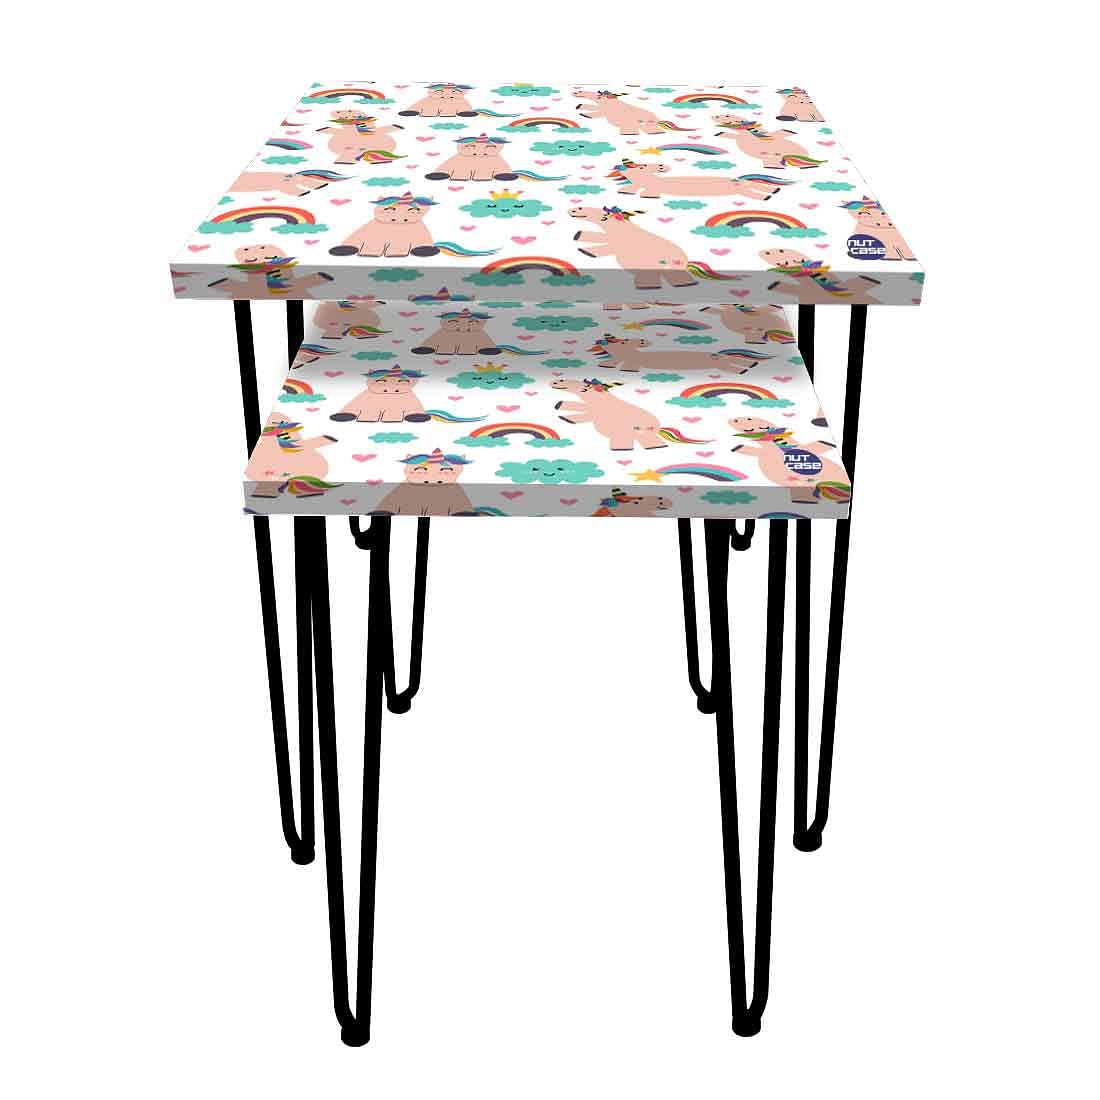 Designer Nest of Tables Side Table for Living Room Balcony - Unicorns Cloud Nutcase